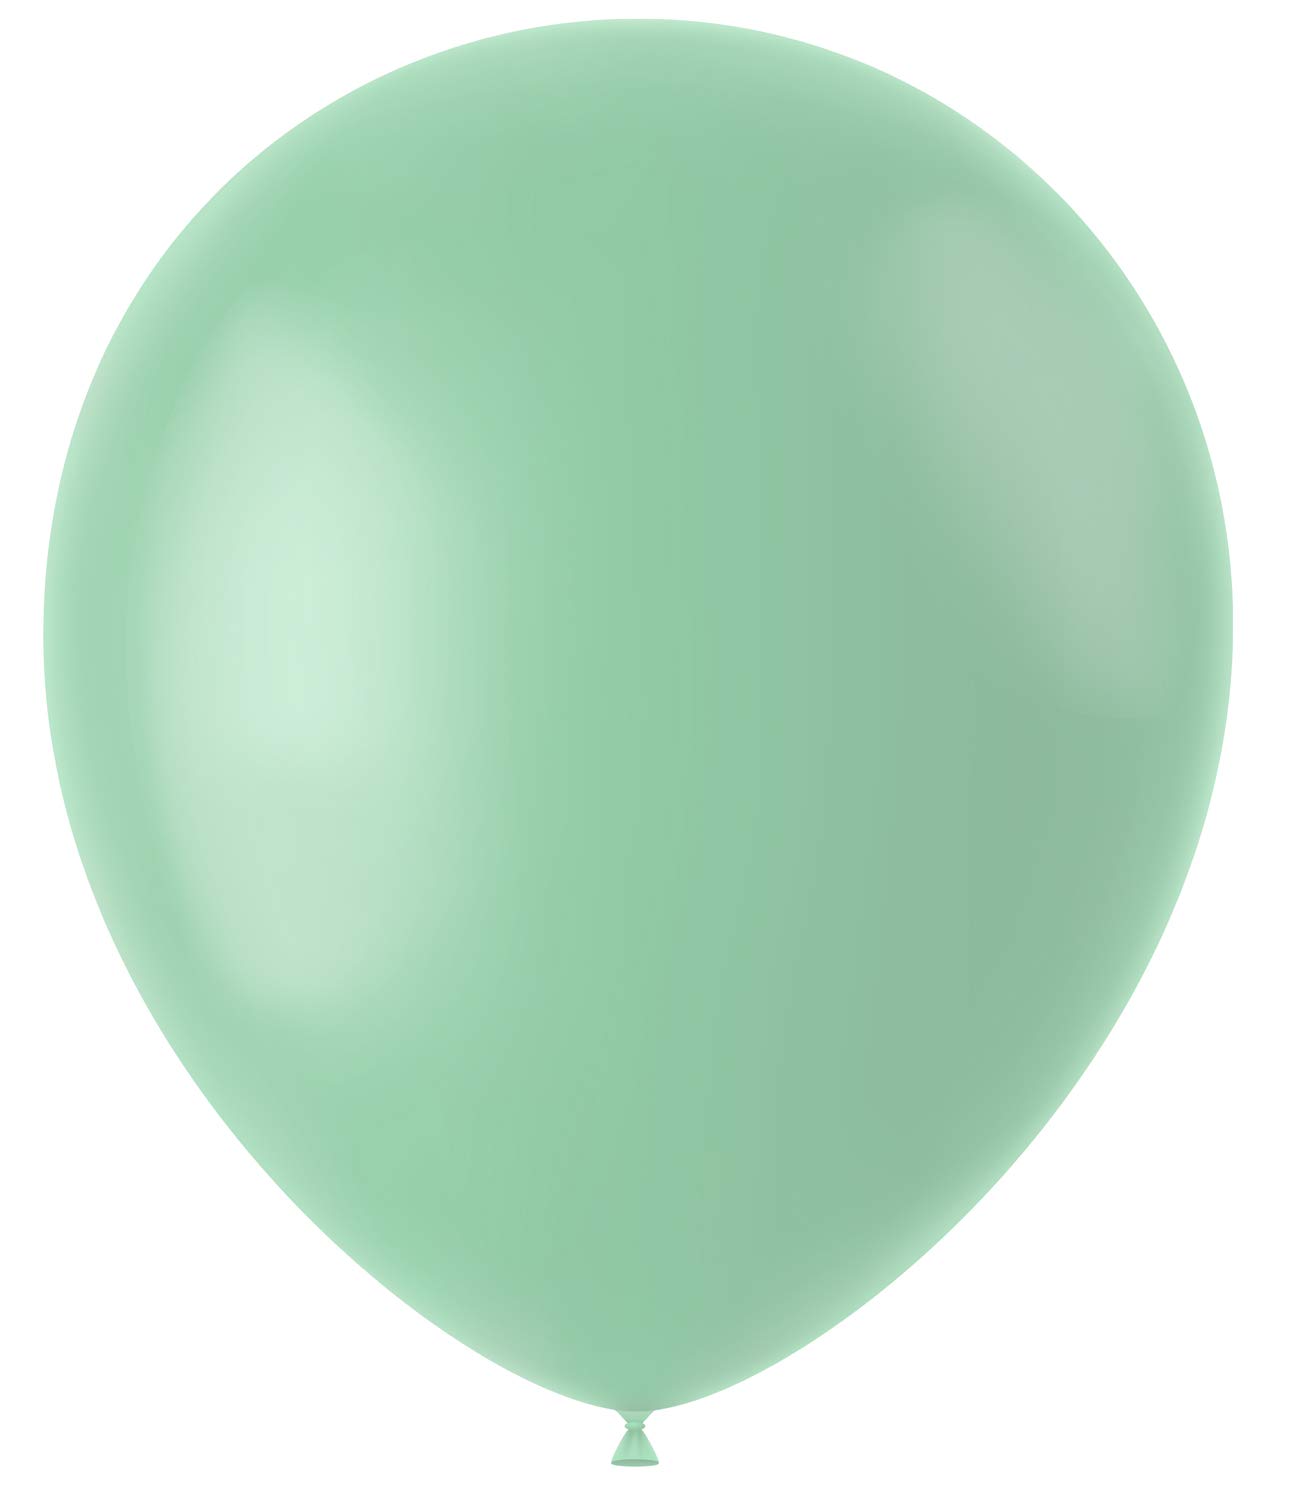 Folat 19654 - Latex Luftballons Oval - hellgrün matt - 33cm - 100 Stk.